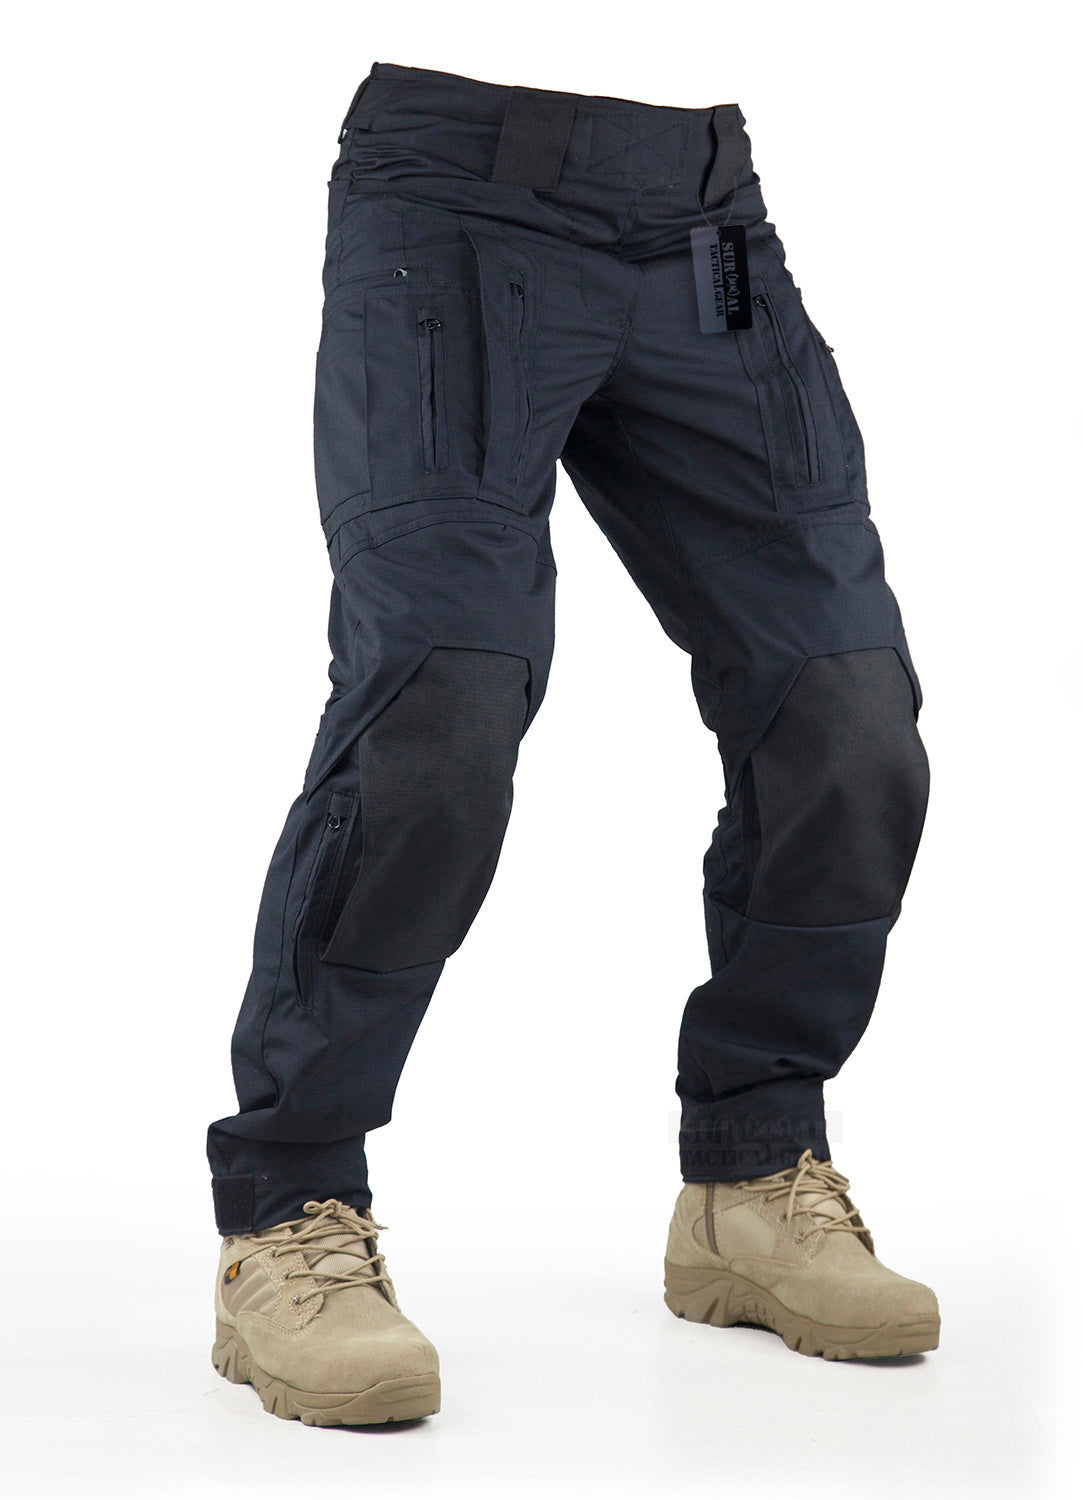 Vertx Tac Pants | Dude clothes, Tactical clothing, Survival gear clothing